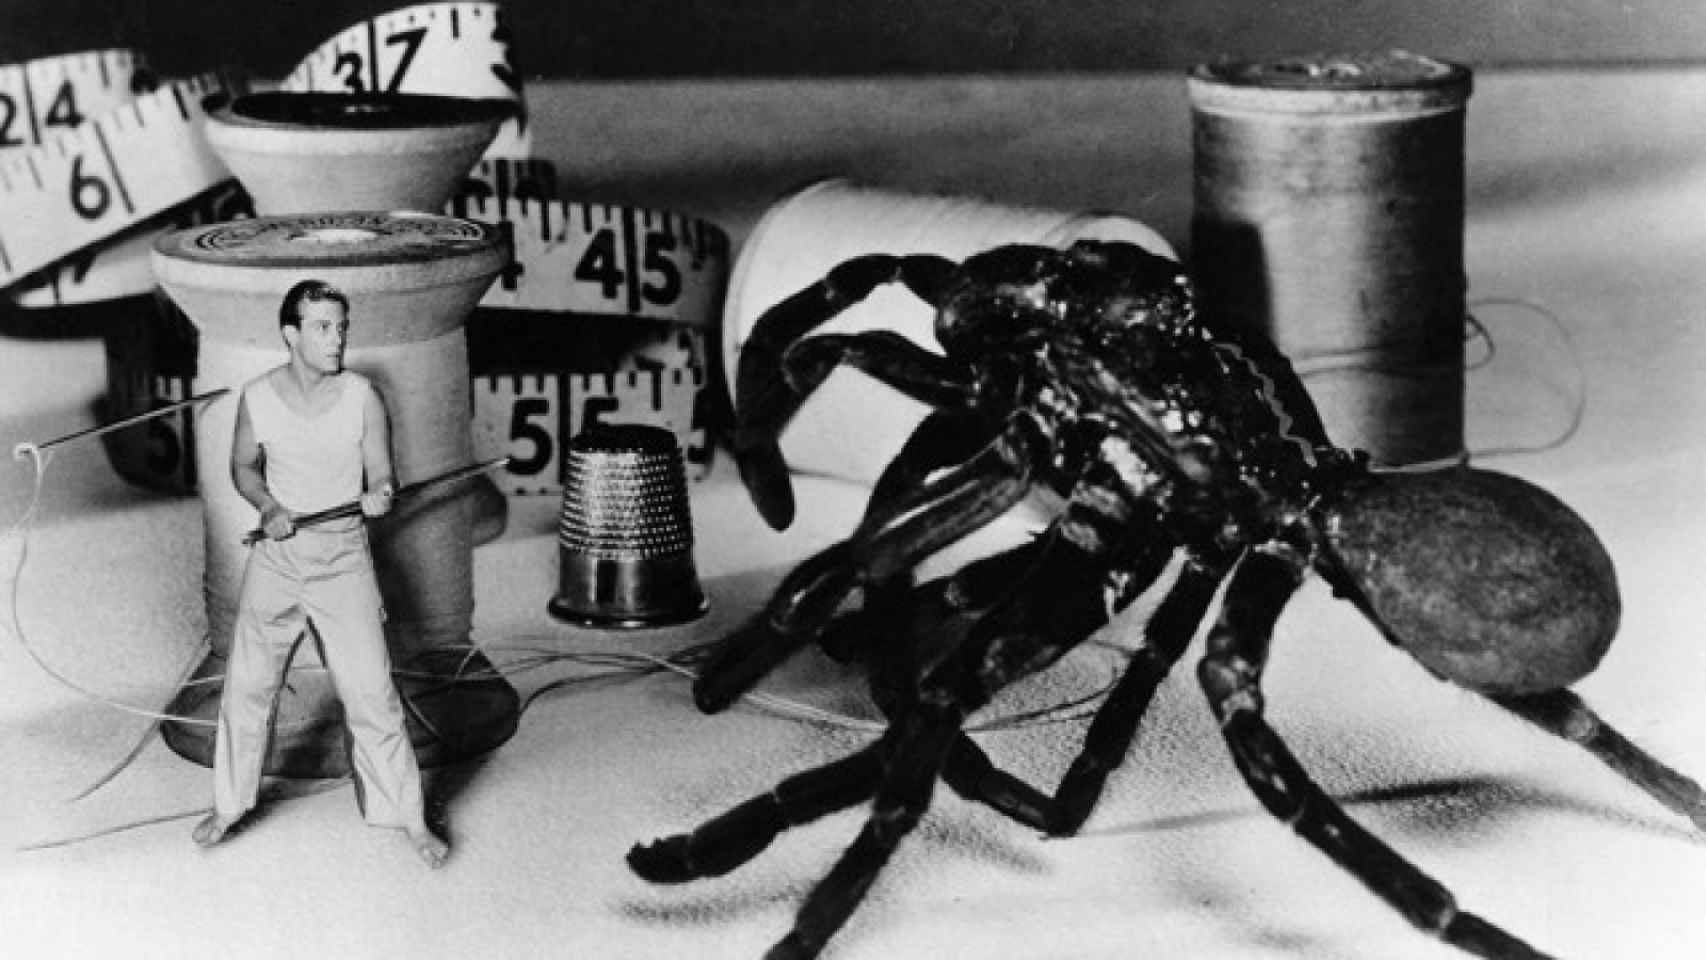 El increíble hombre menguante (1957) contra la araña, épica en miniatura.